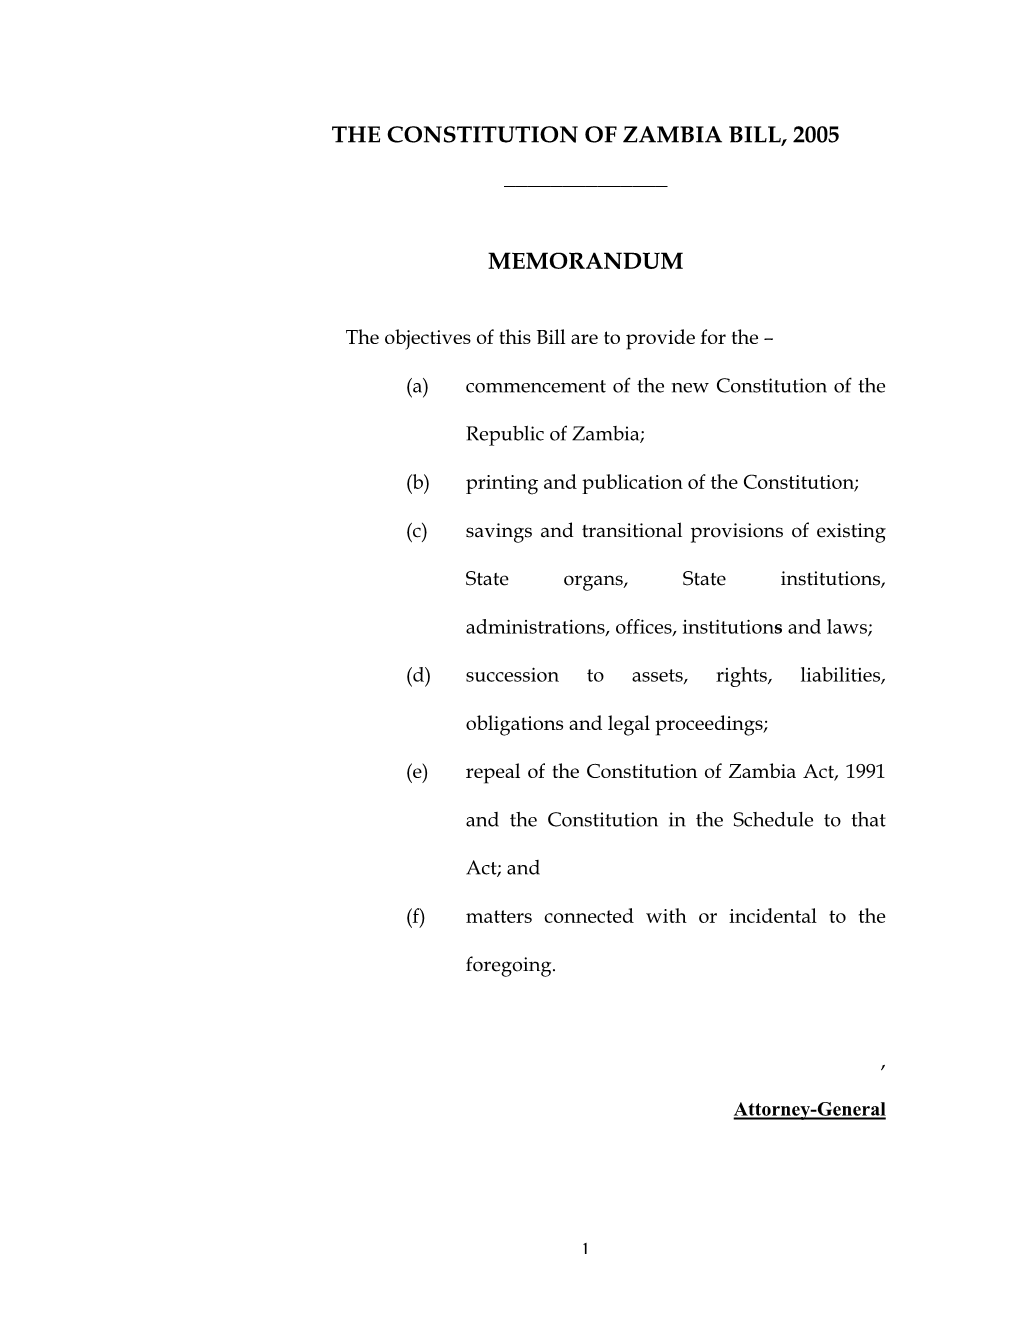 The Constitution of Zambia Bill, 2005 ______